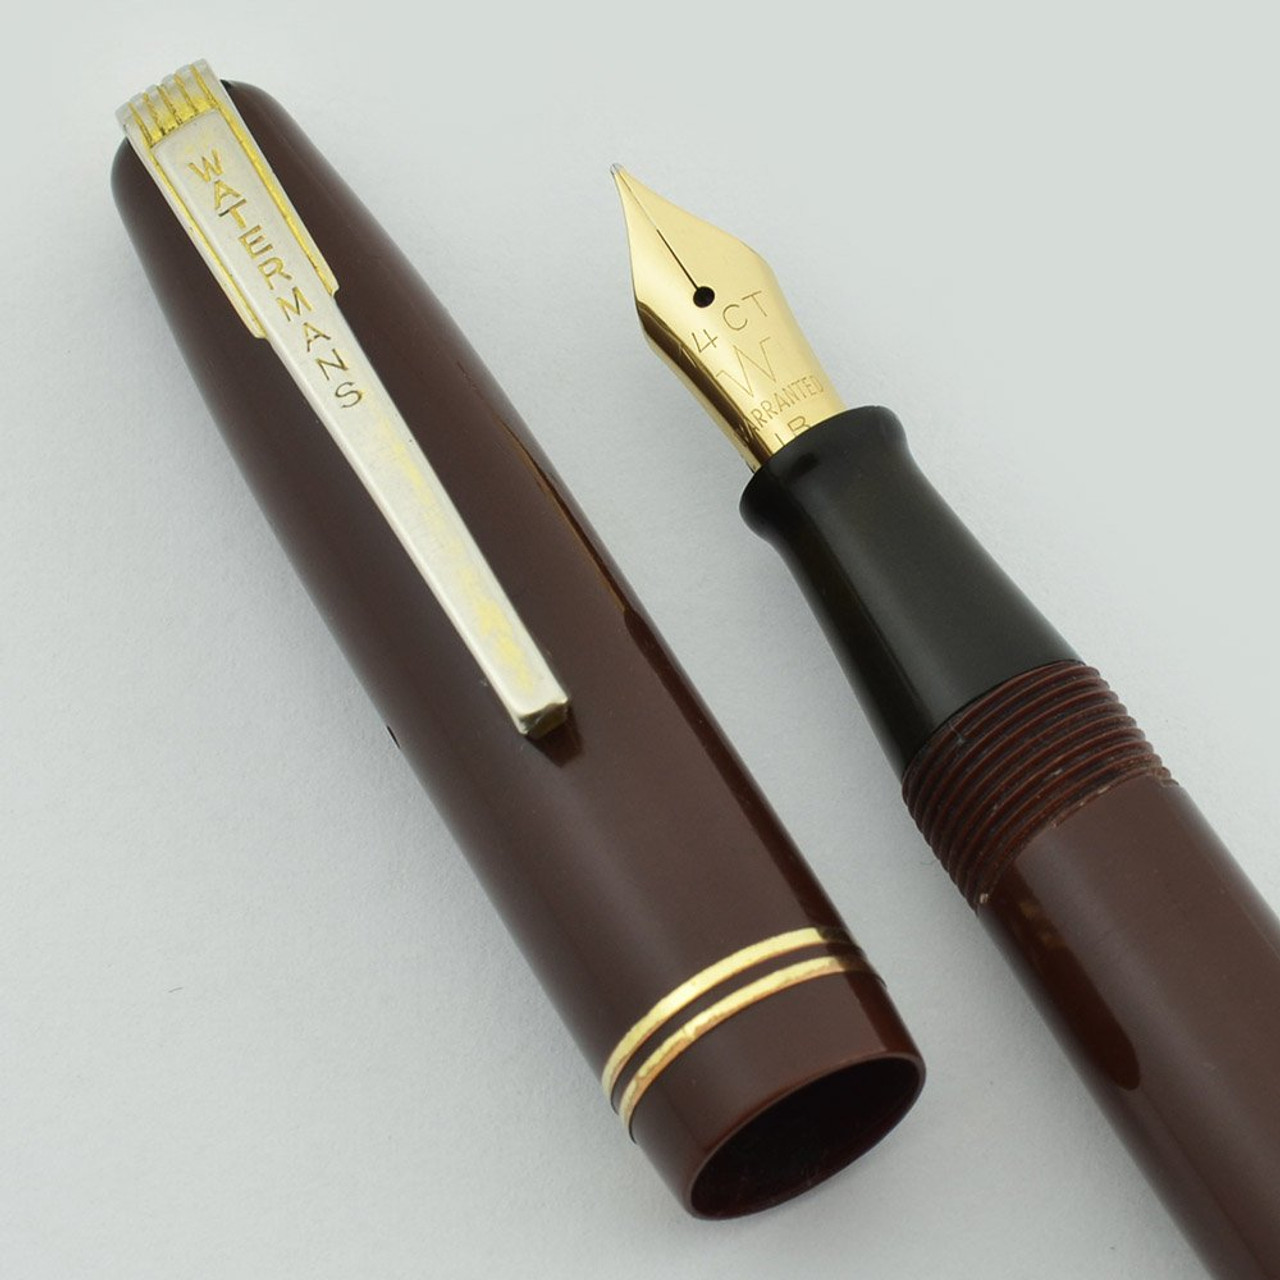 Waterman 512 Fountain Pen - England, Brown, Fine Semi-Flex Nib (Excellent, Restored)